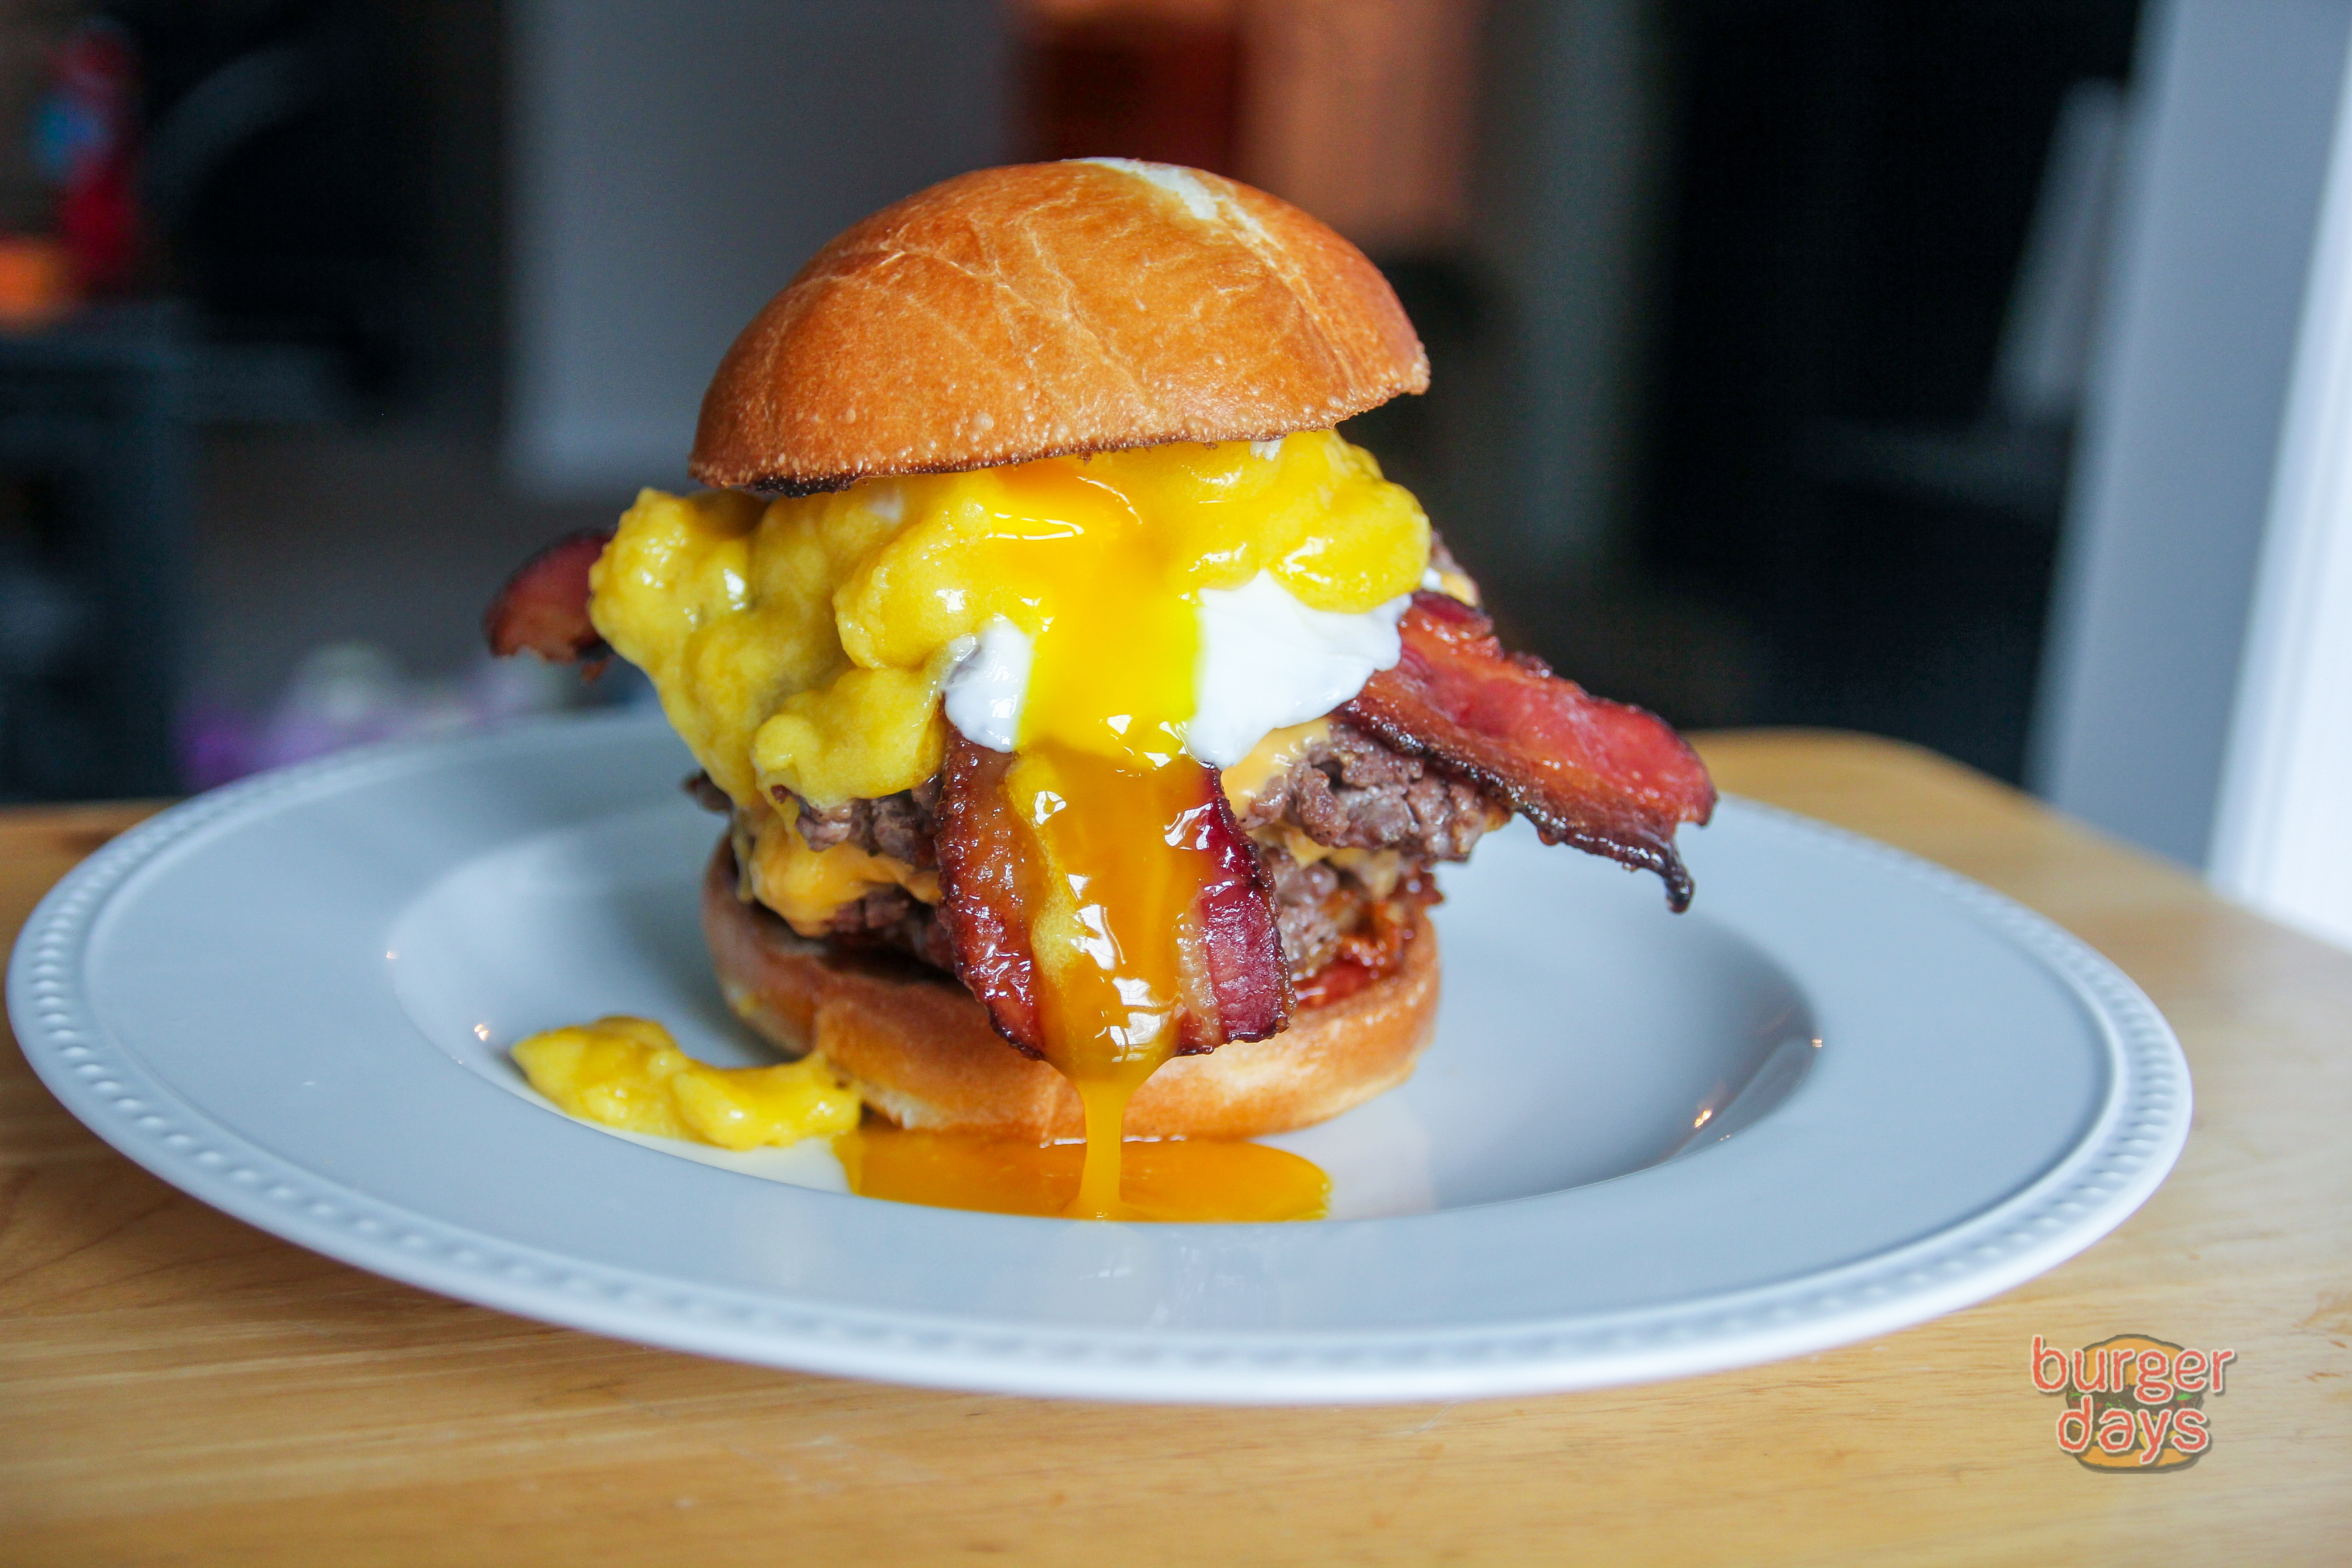 The Definitive Breakfast Burger [Burger Days: DIY] - Burger Days - A